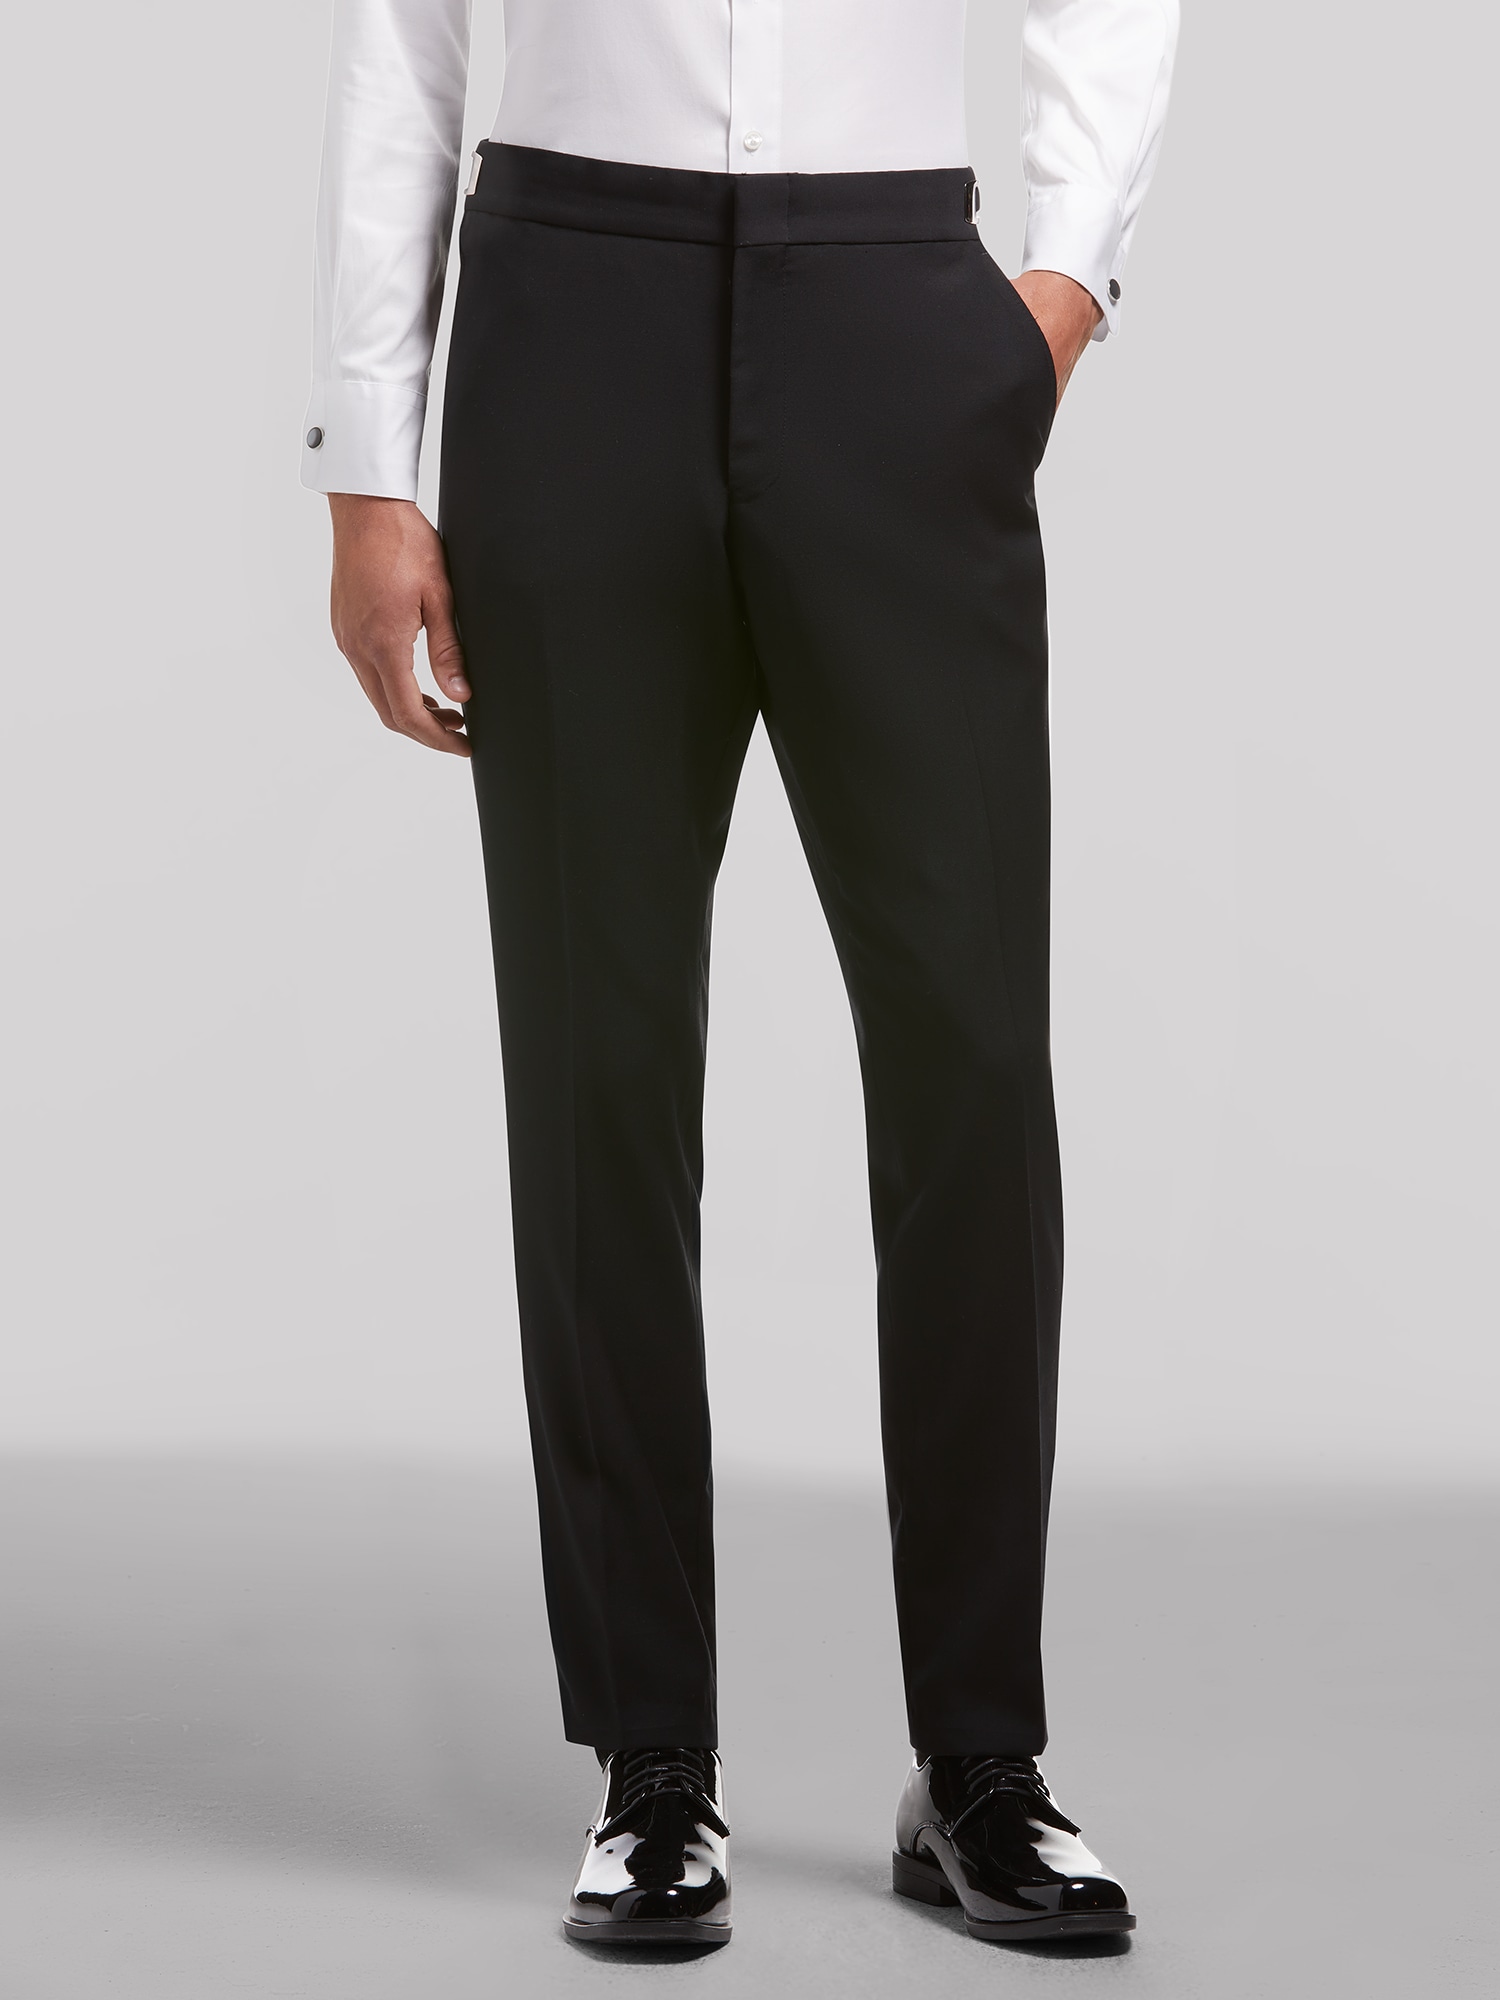 Black Shawl Lapel Tuxedo by Calvin Klein l Tuxedo Rental | Moores Clothing